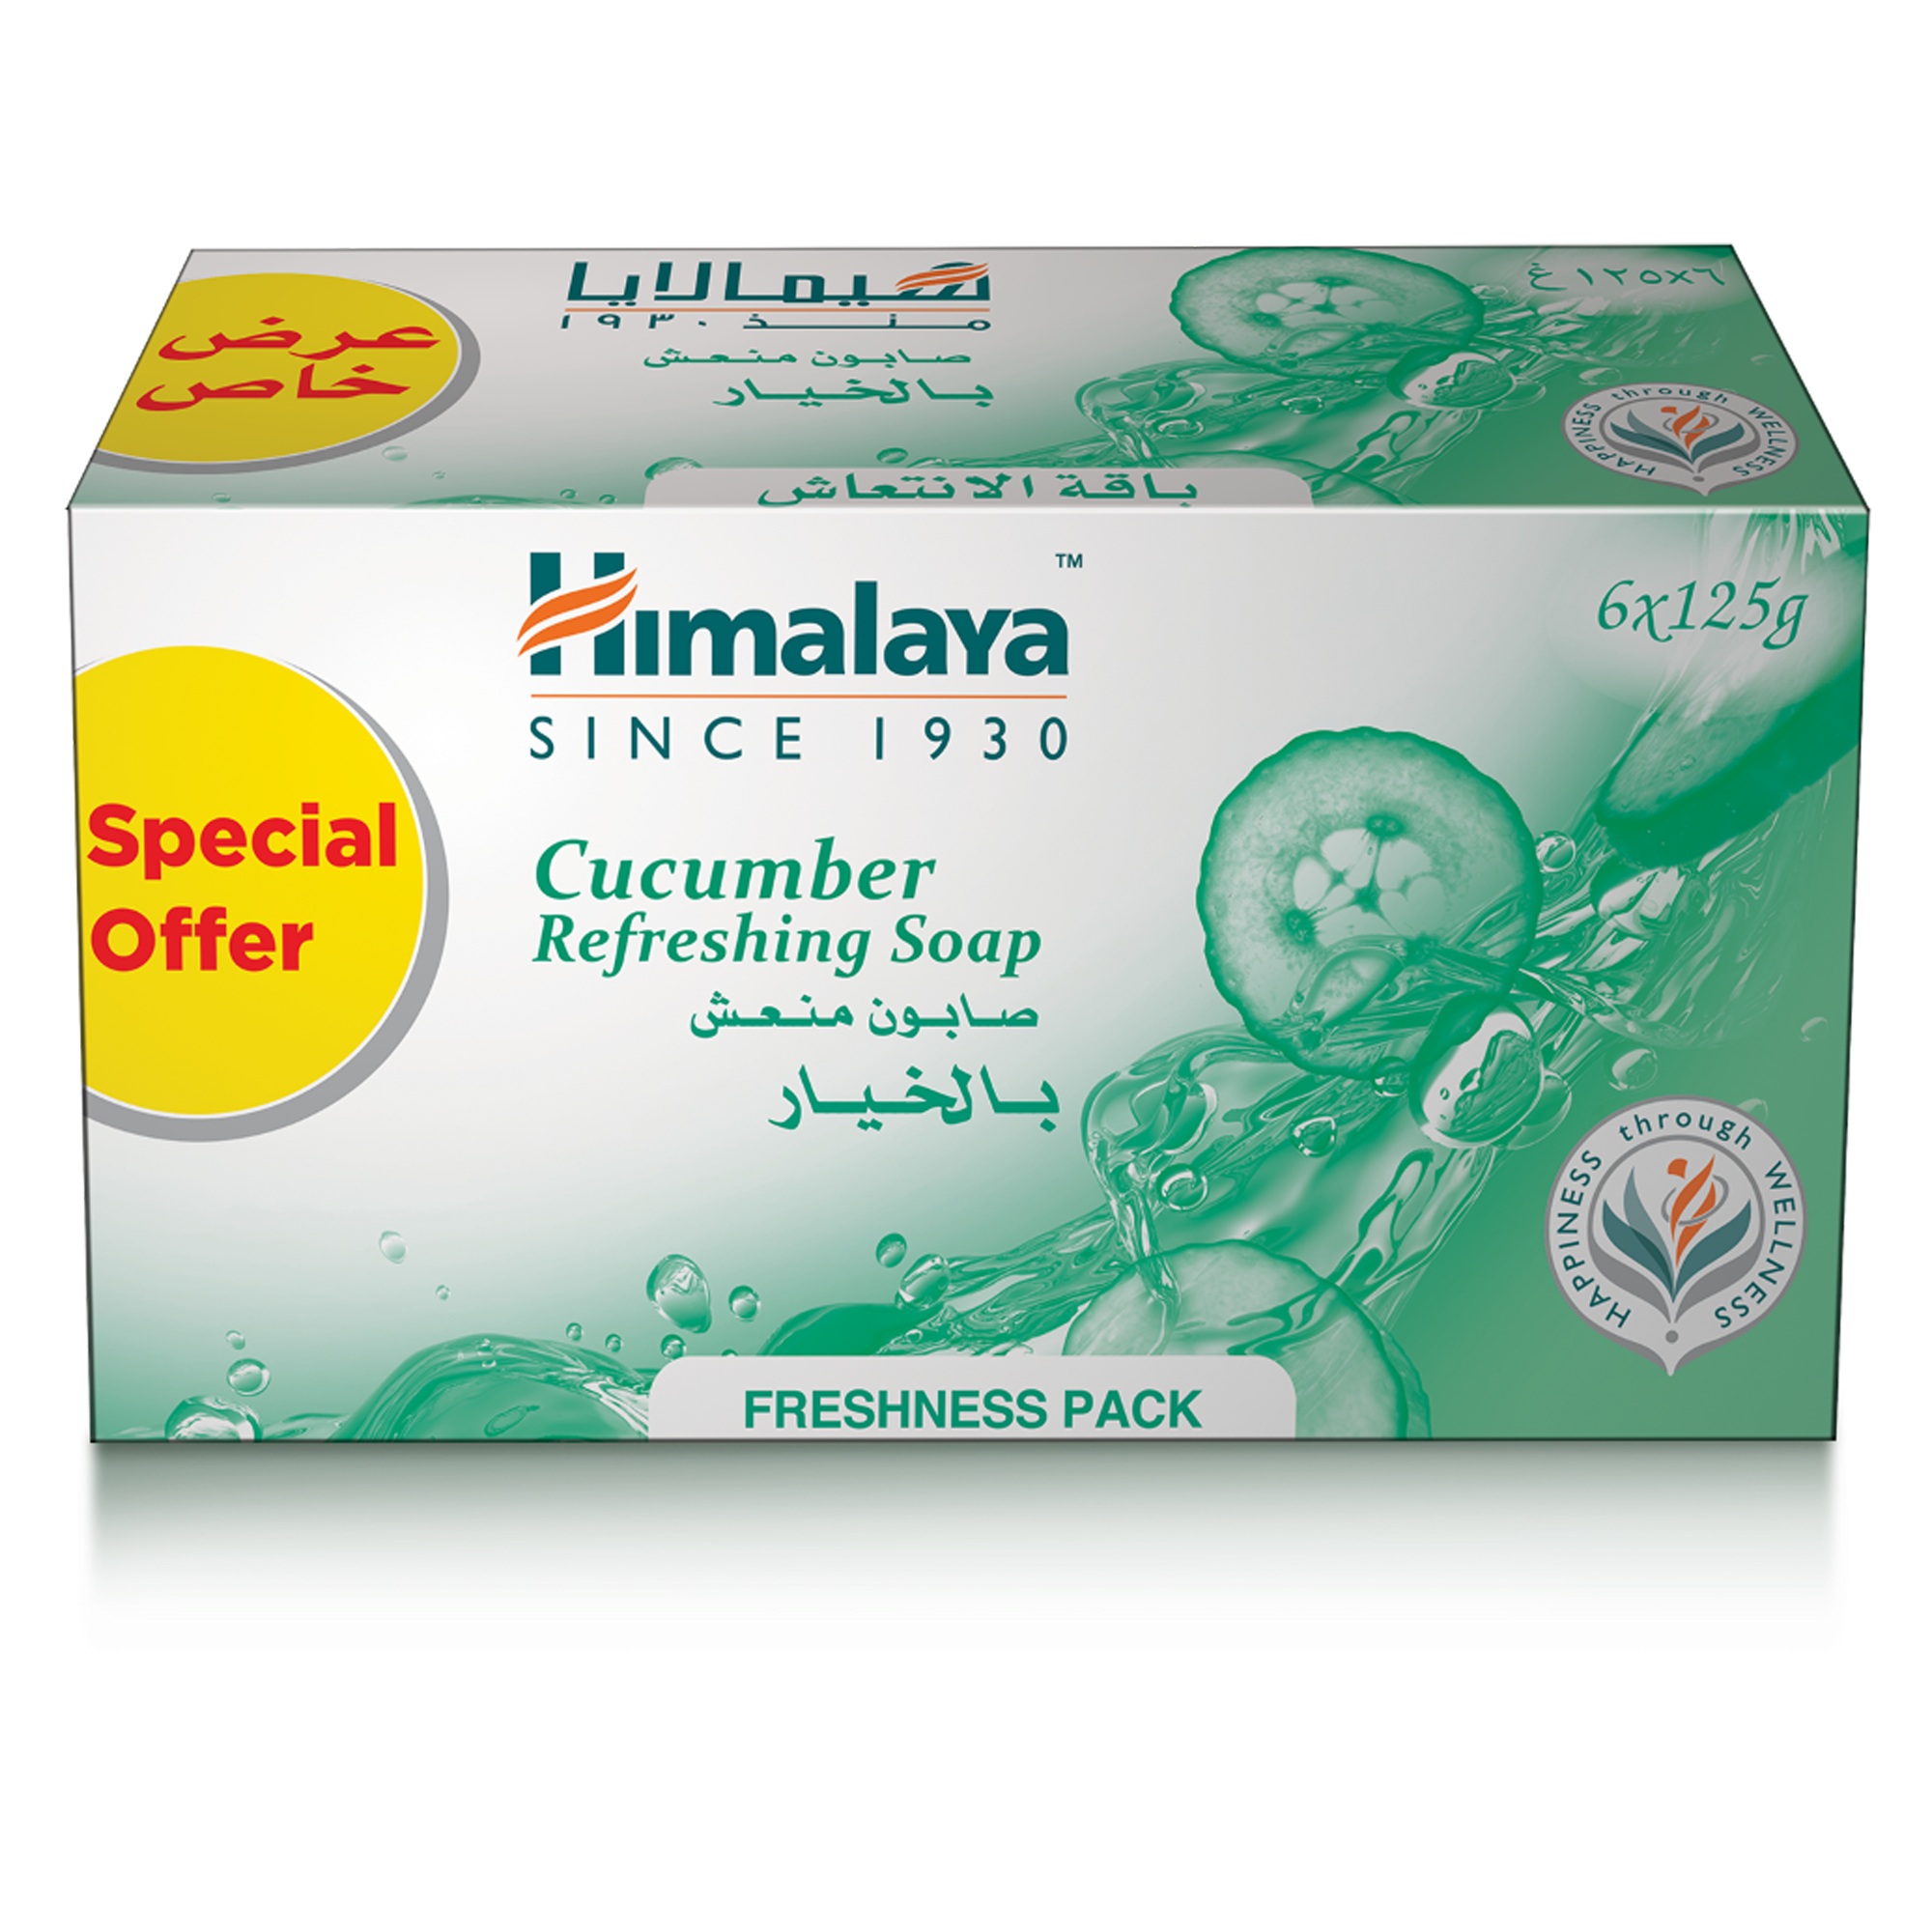 Himalaya Cucumber Refreshing Soap 6x125g - Refreshes & Nourishes Skin